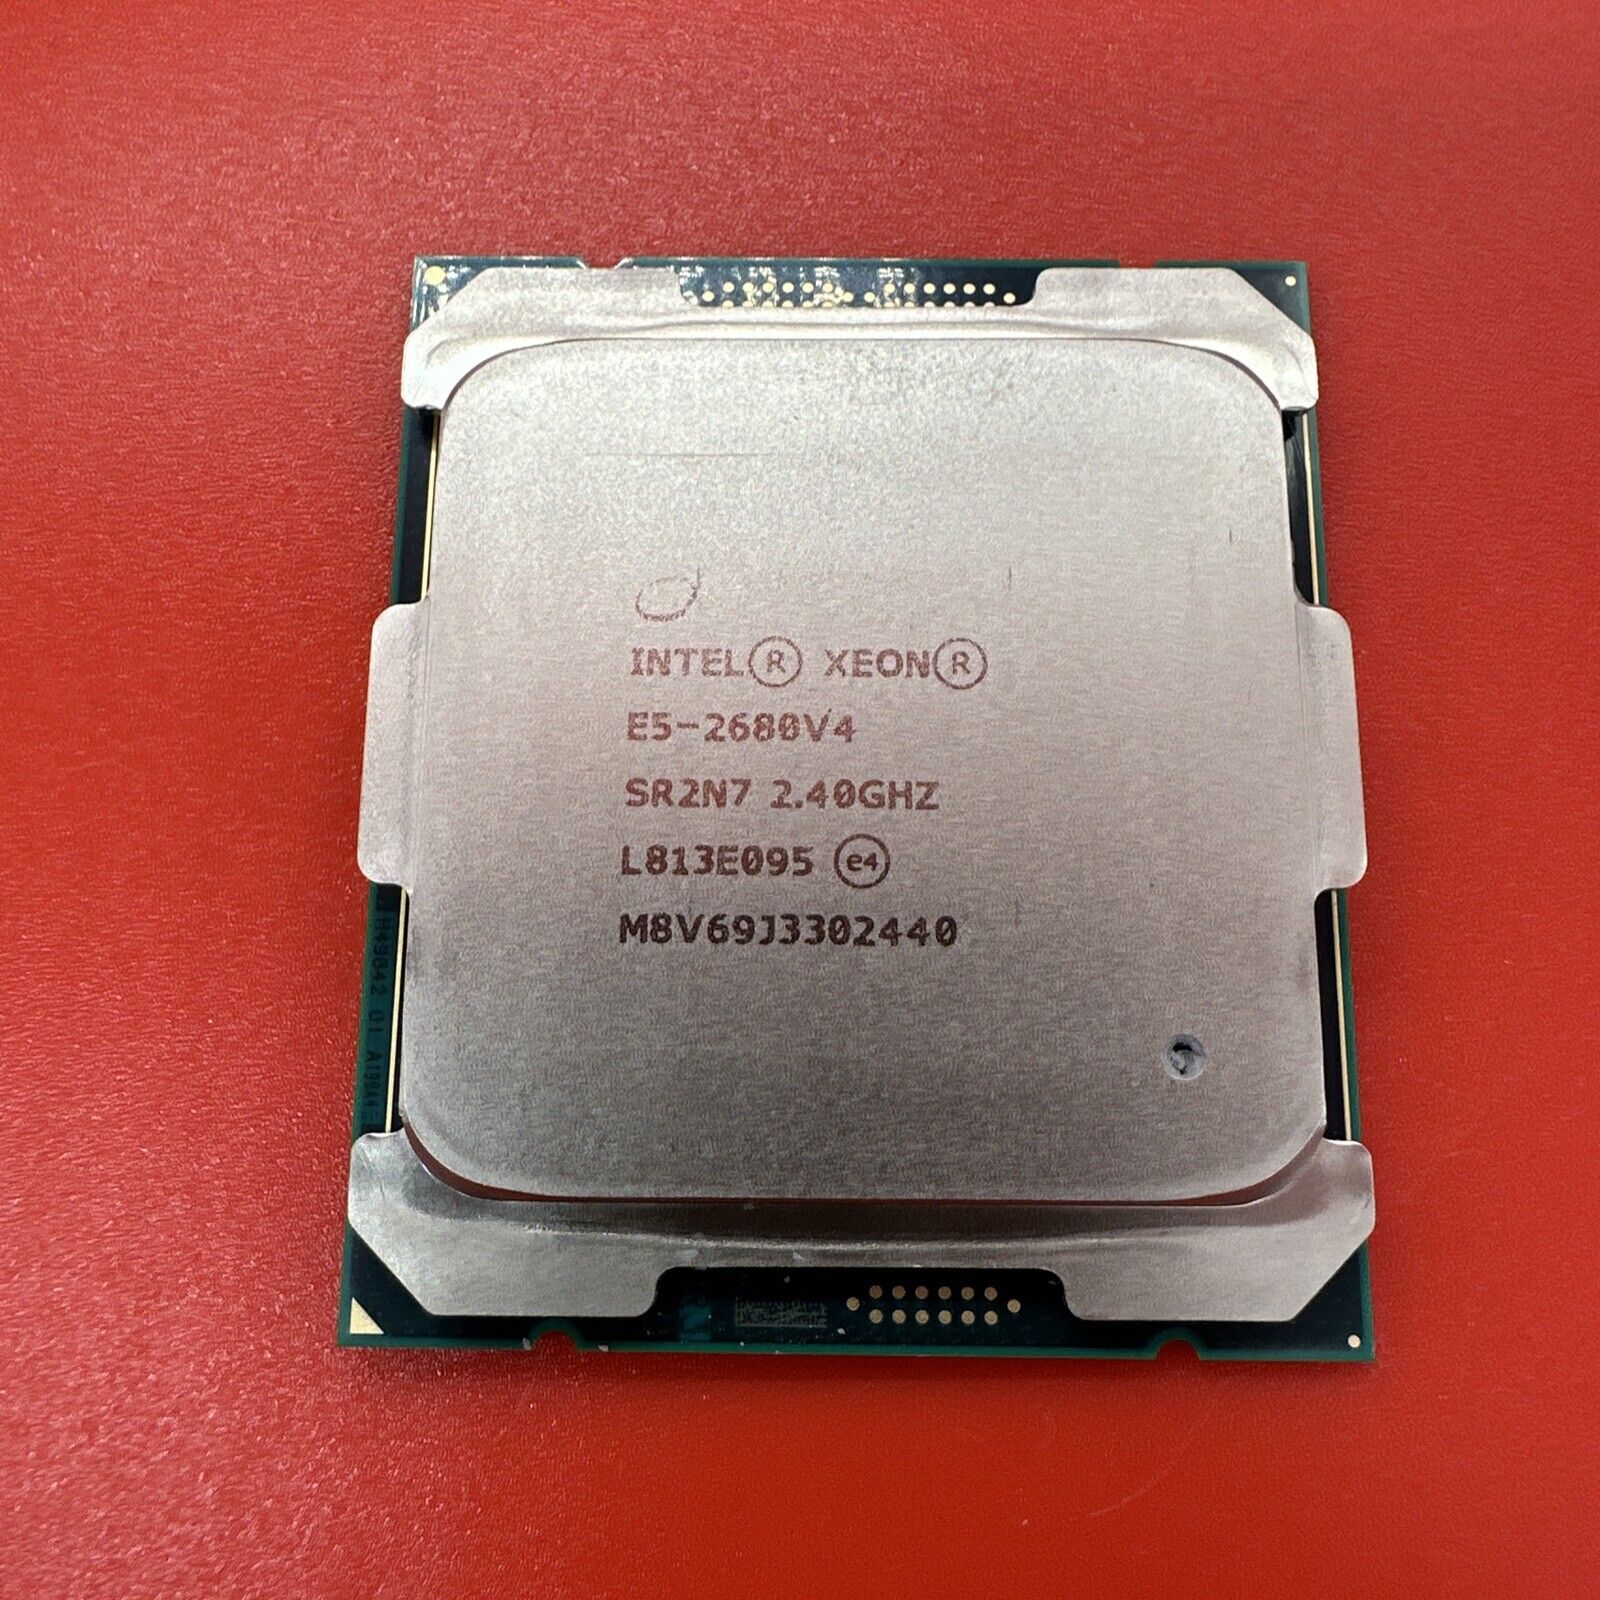 Intel Xeon E5-2680 v4 SR2N7 14 Core 2.4 GHz Server Processor